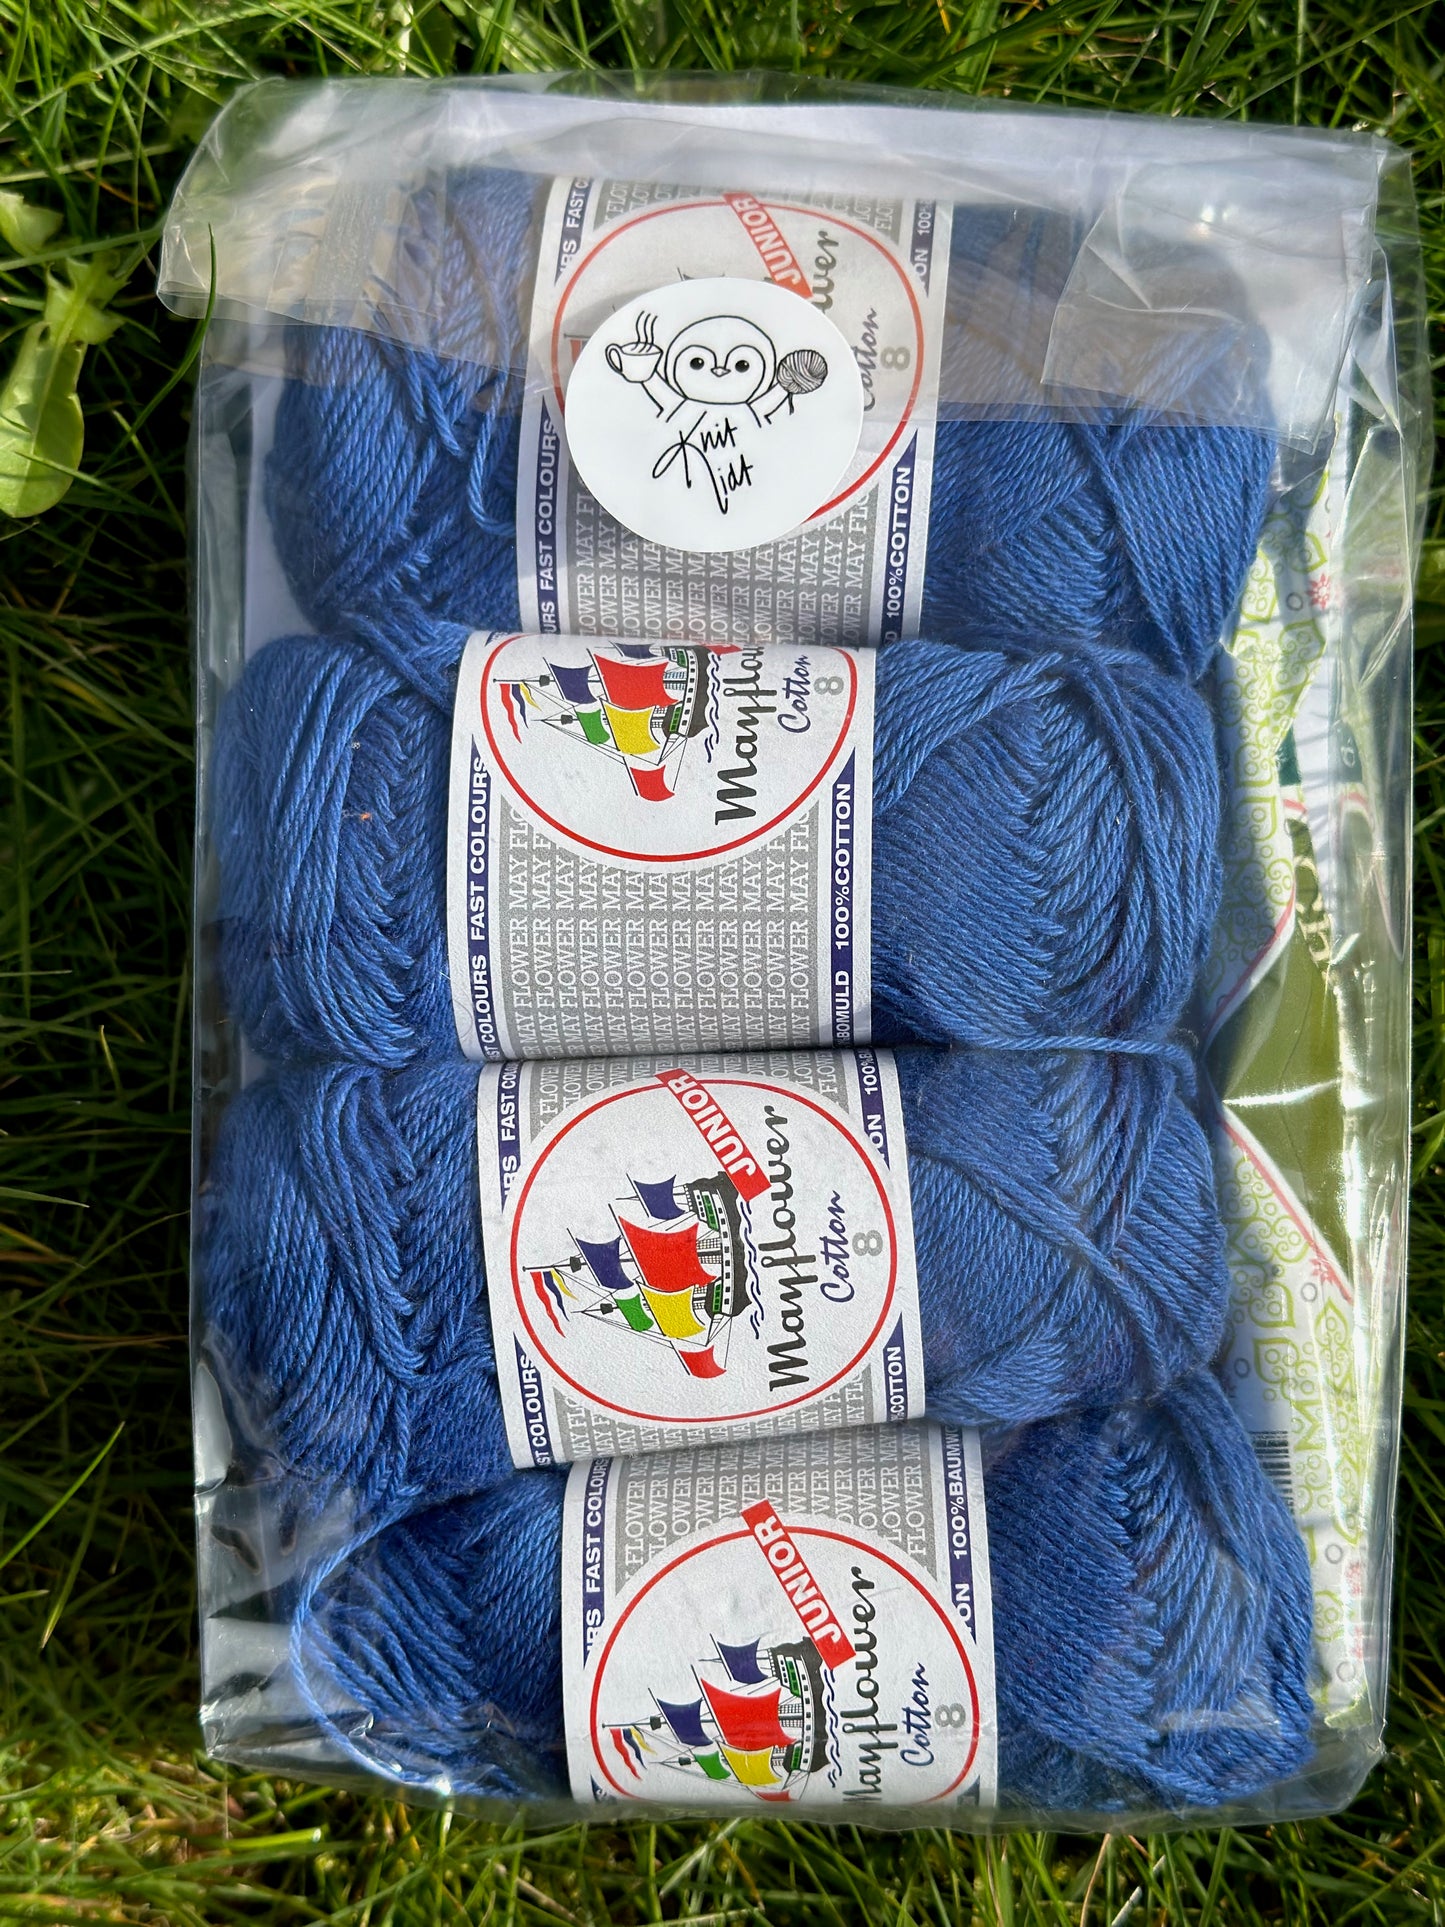 Knitlidt-Handtuch und Knitlidt-Lappen – Knitlidt-Set